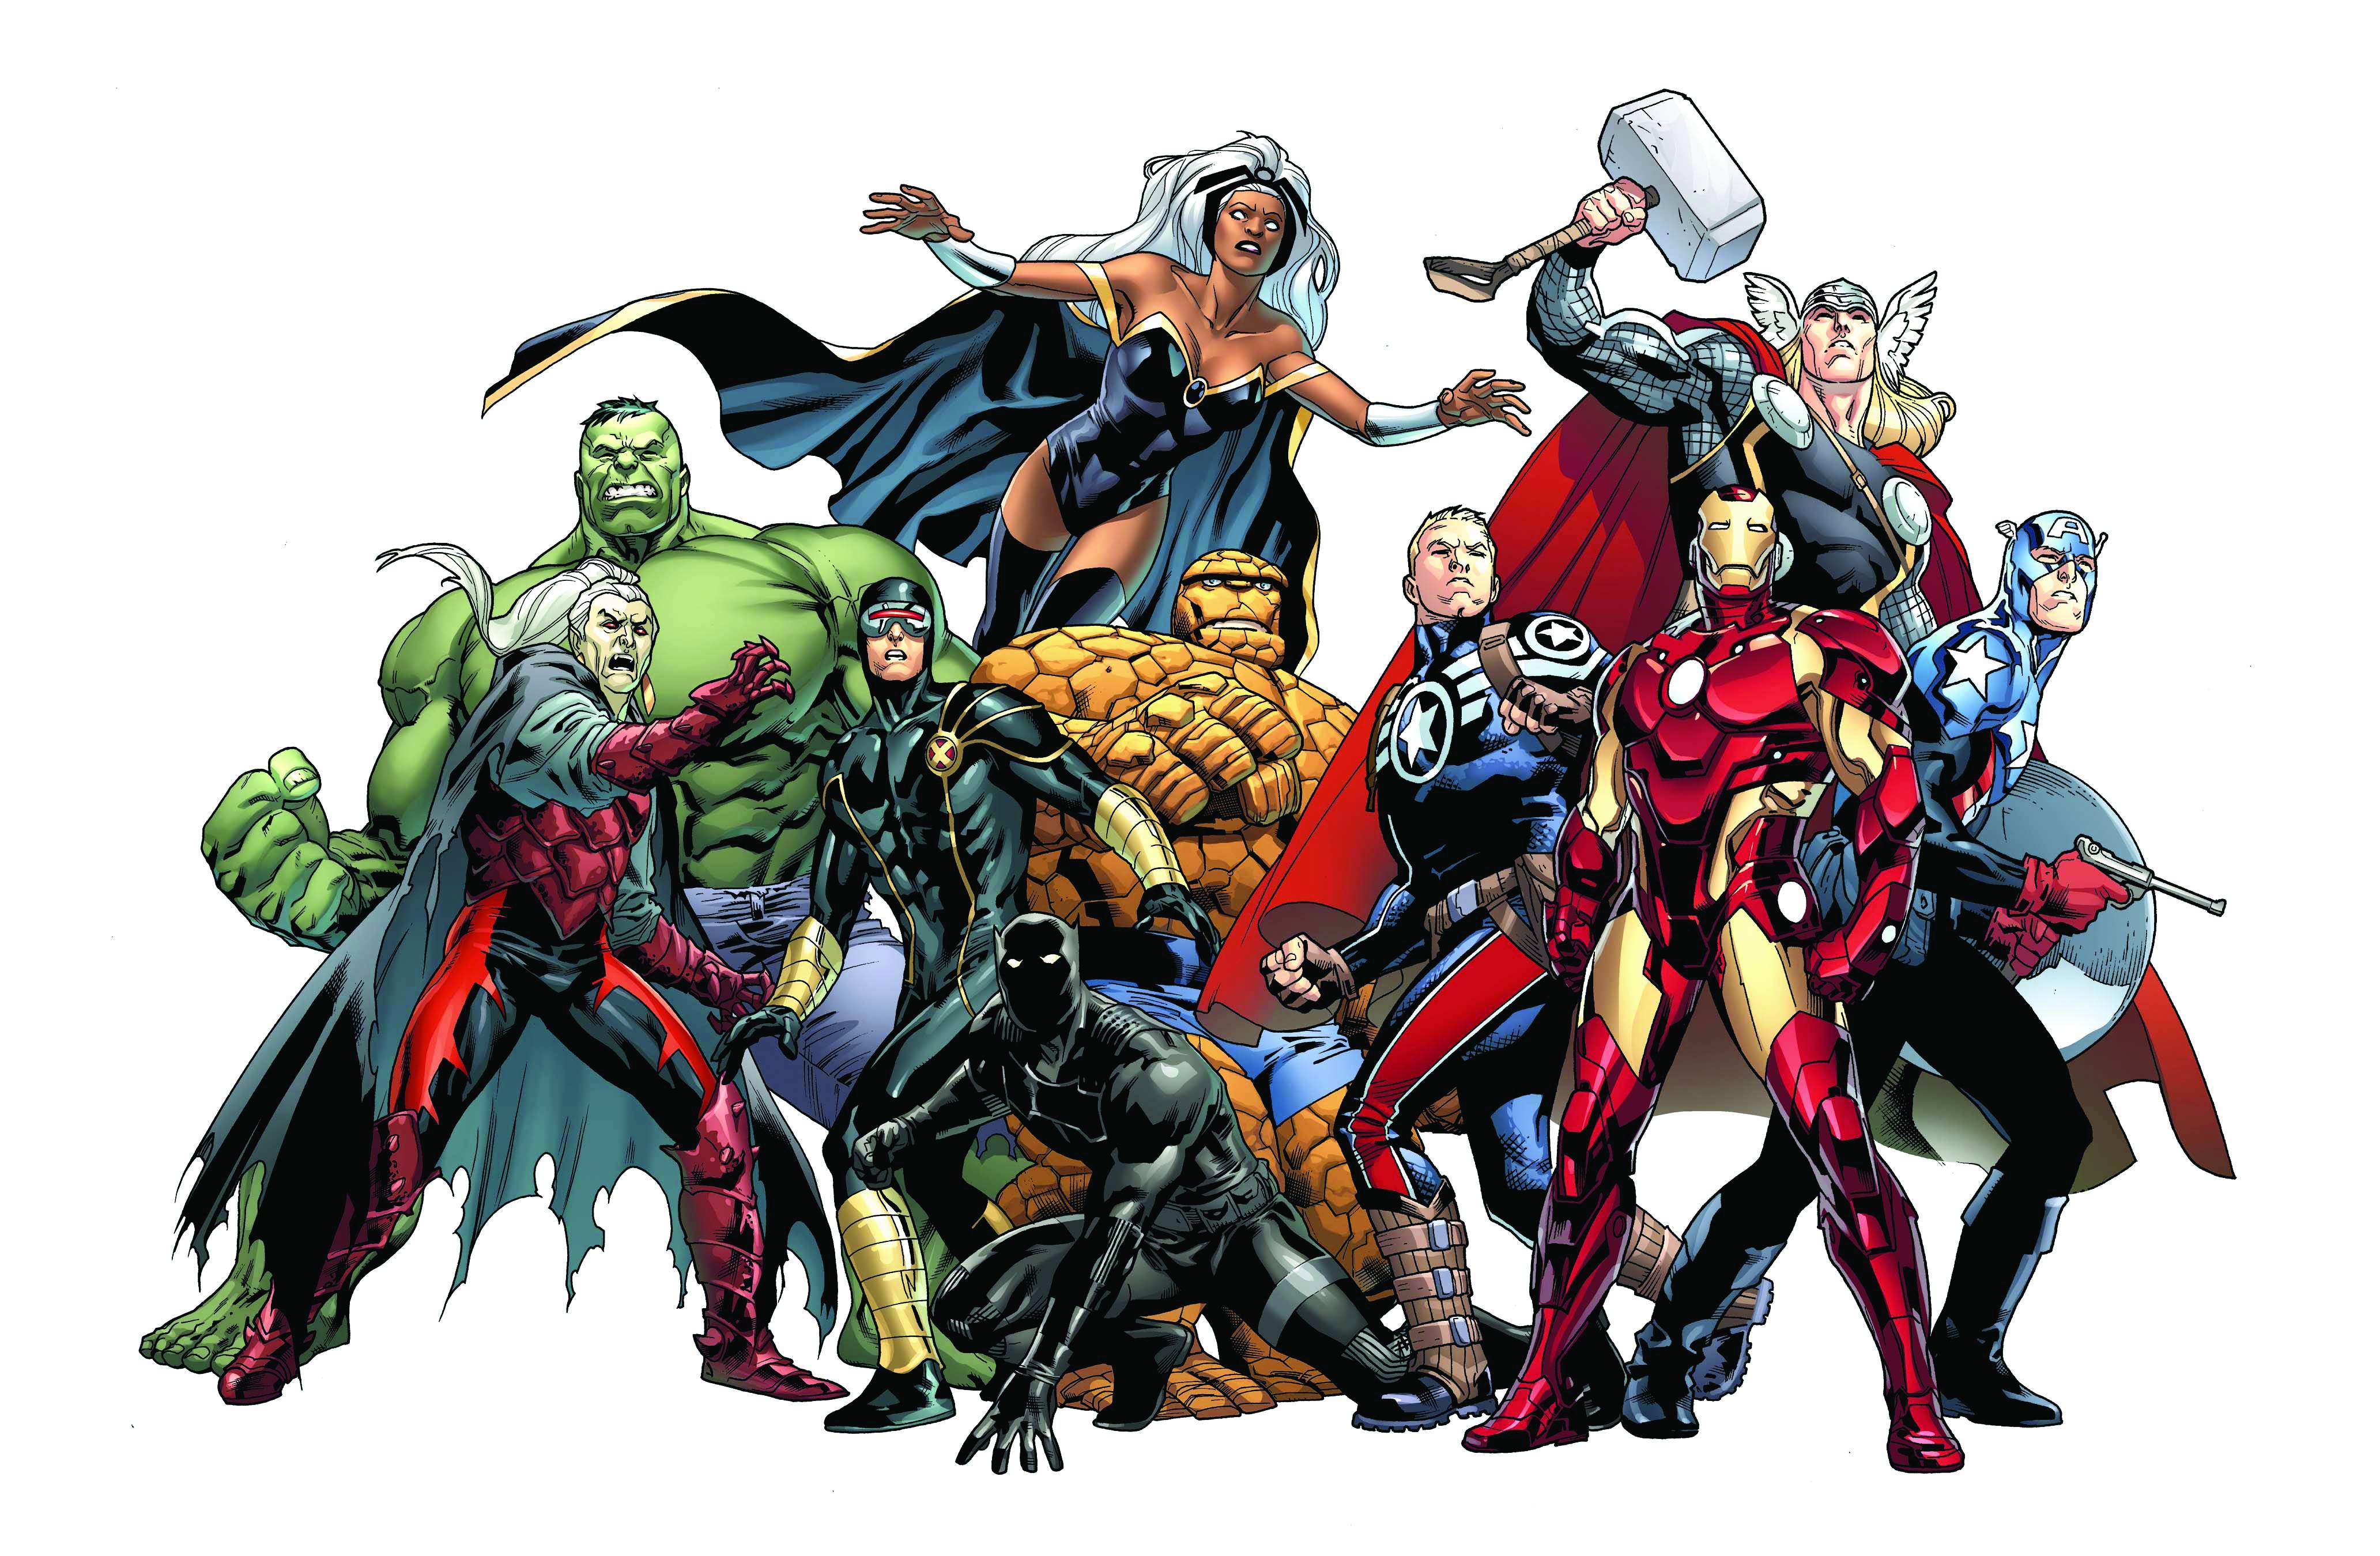 Marvel comics dracula hulk storm cyclops black panther the thing